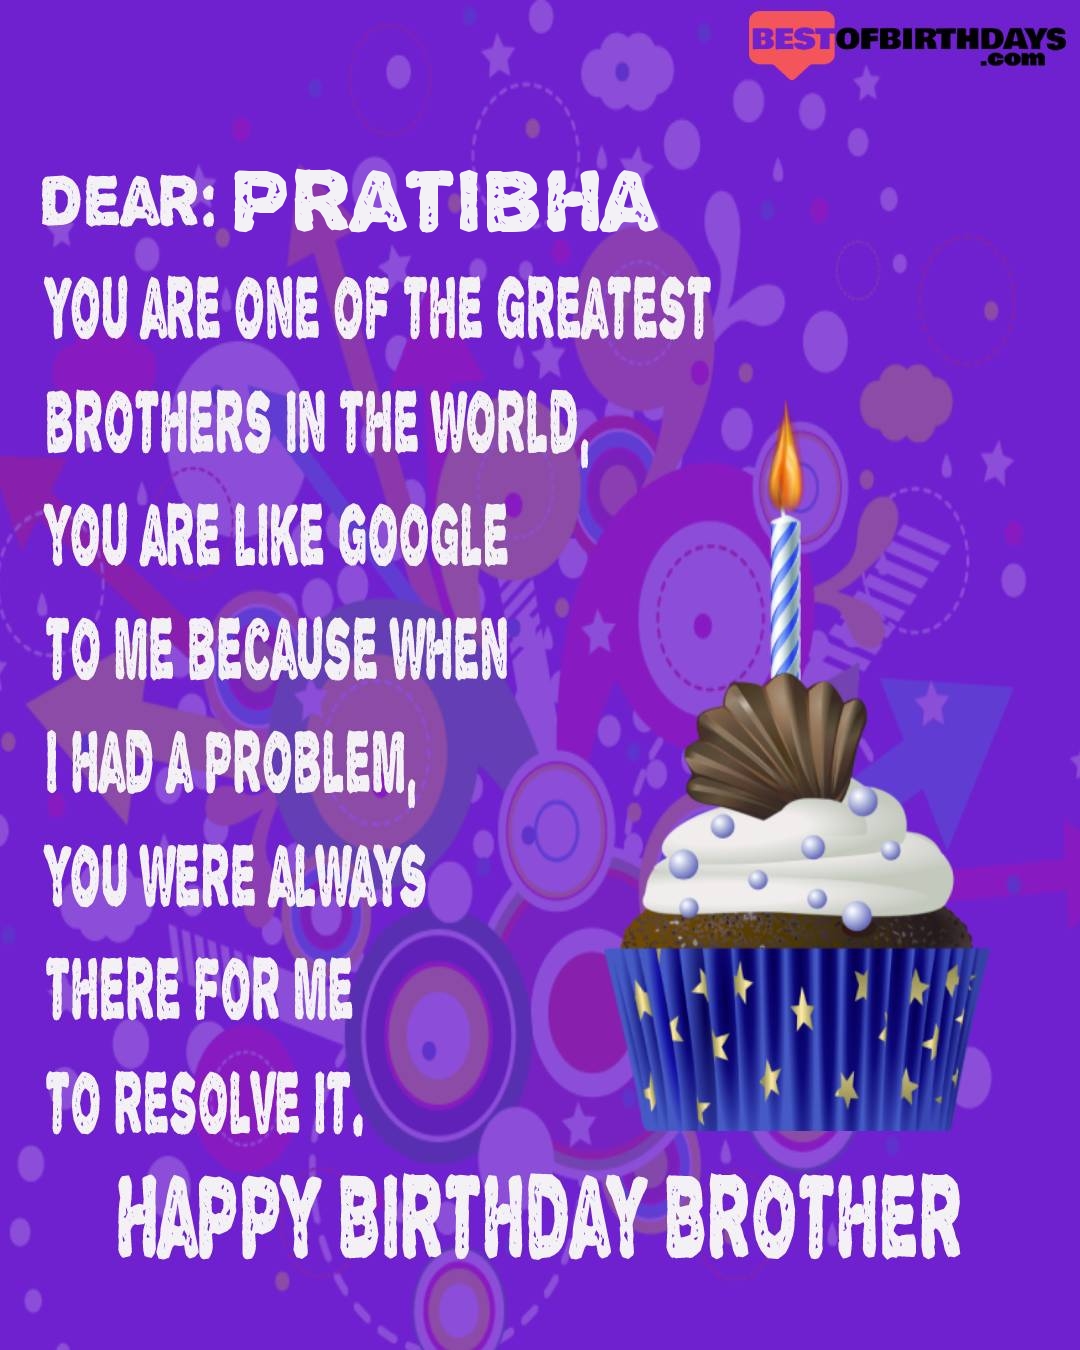 Happy birthday pratibha bhai brother bro